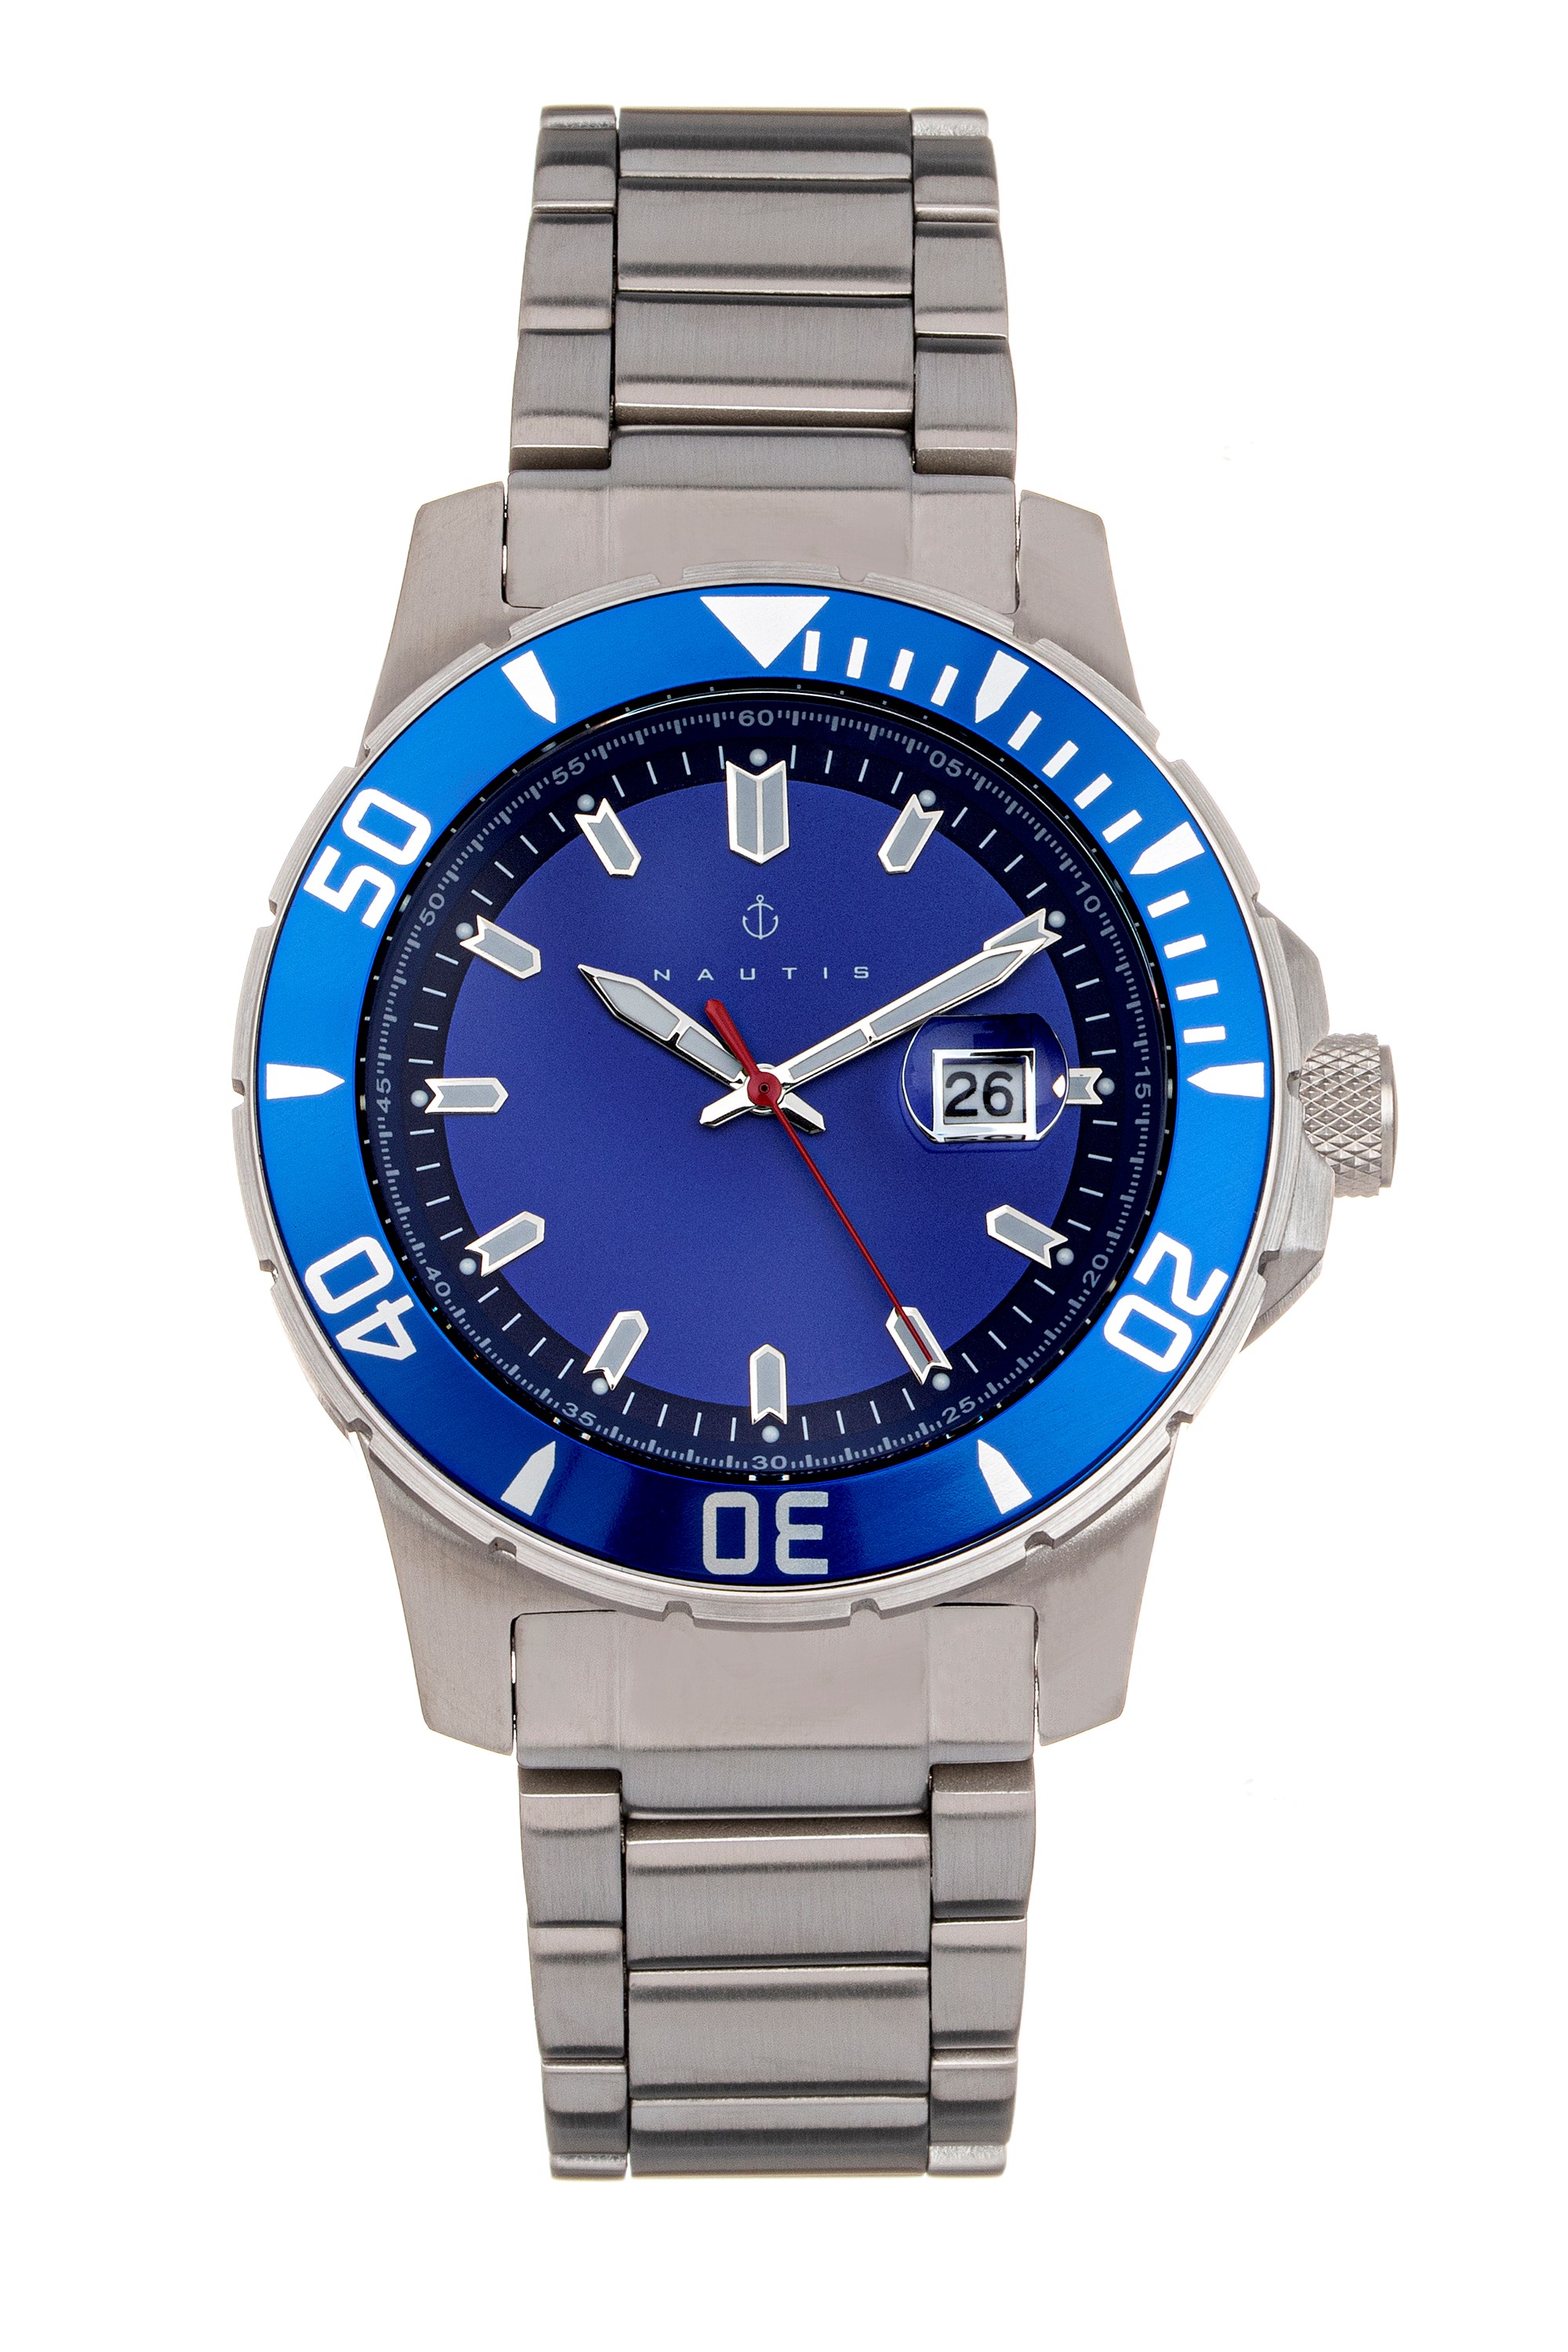 Admiralty Pro 200 Deep Diving Bracelet Watch -